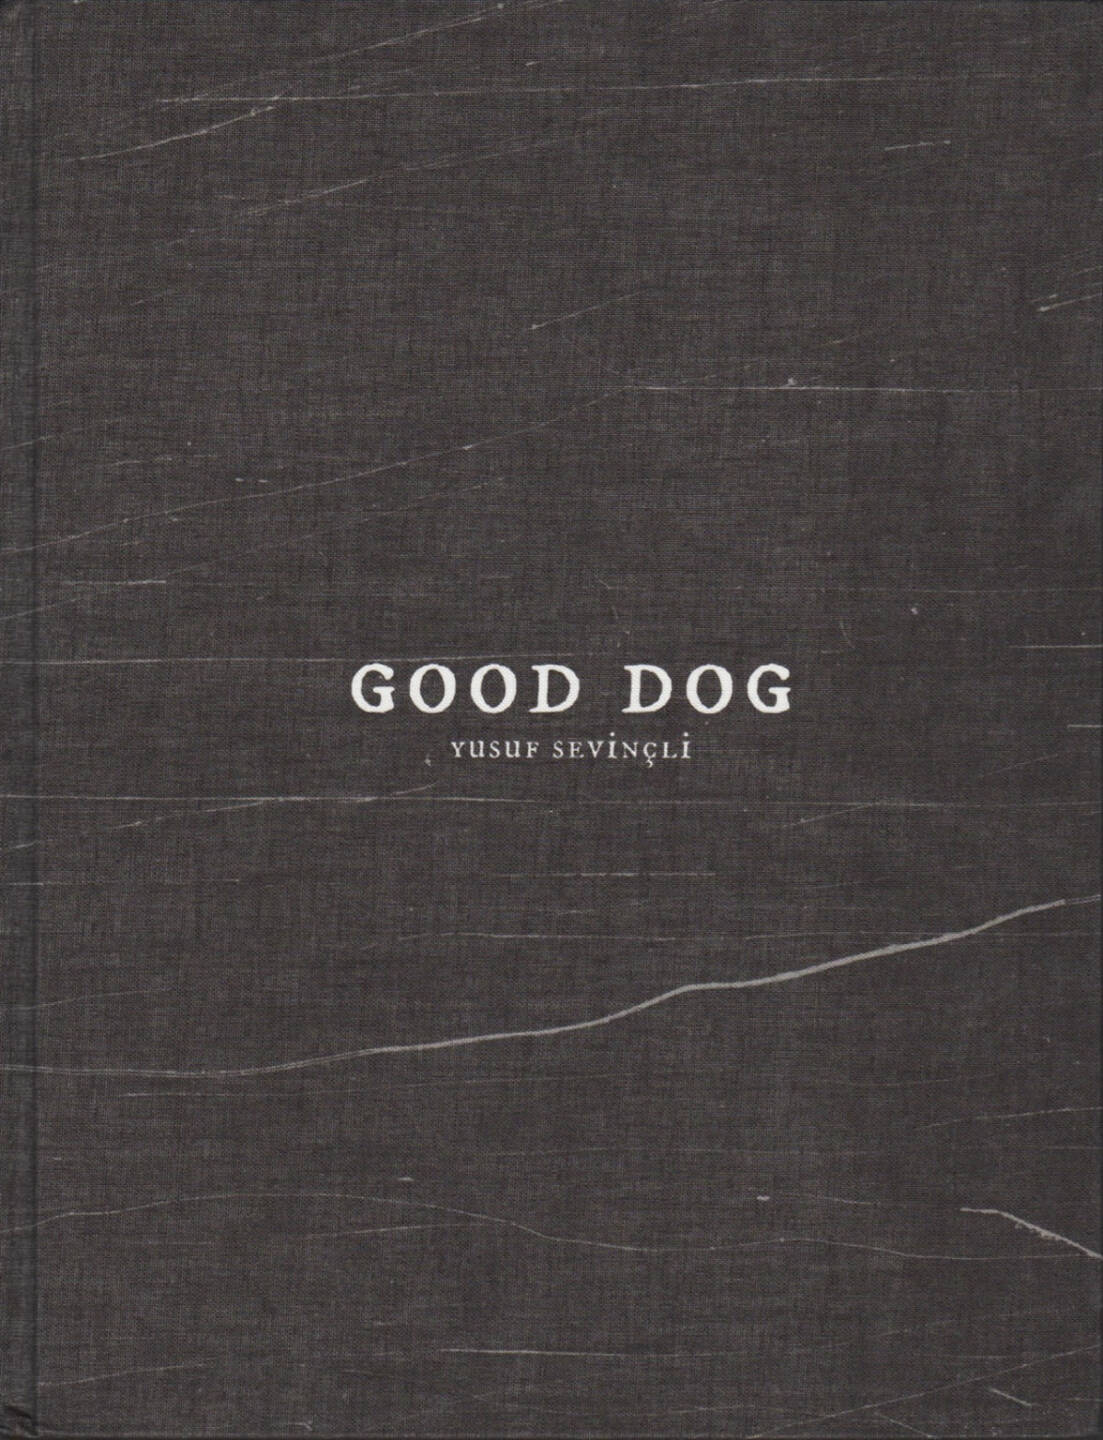 Yusuf Sevincli - Good Dog, Filigranes Éditions 2012, Cover - http://josefchladek.com/book/yusuf_sevincli_-_good_dog